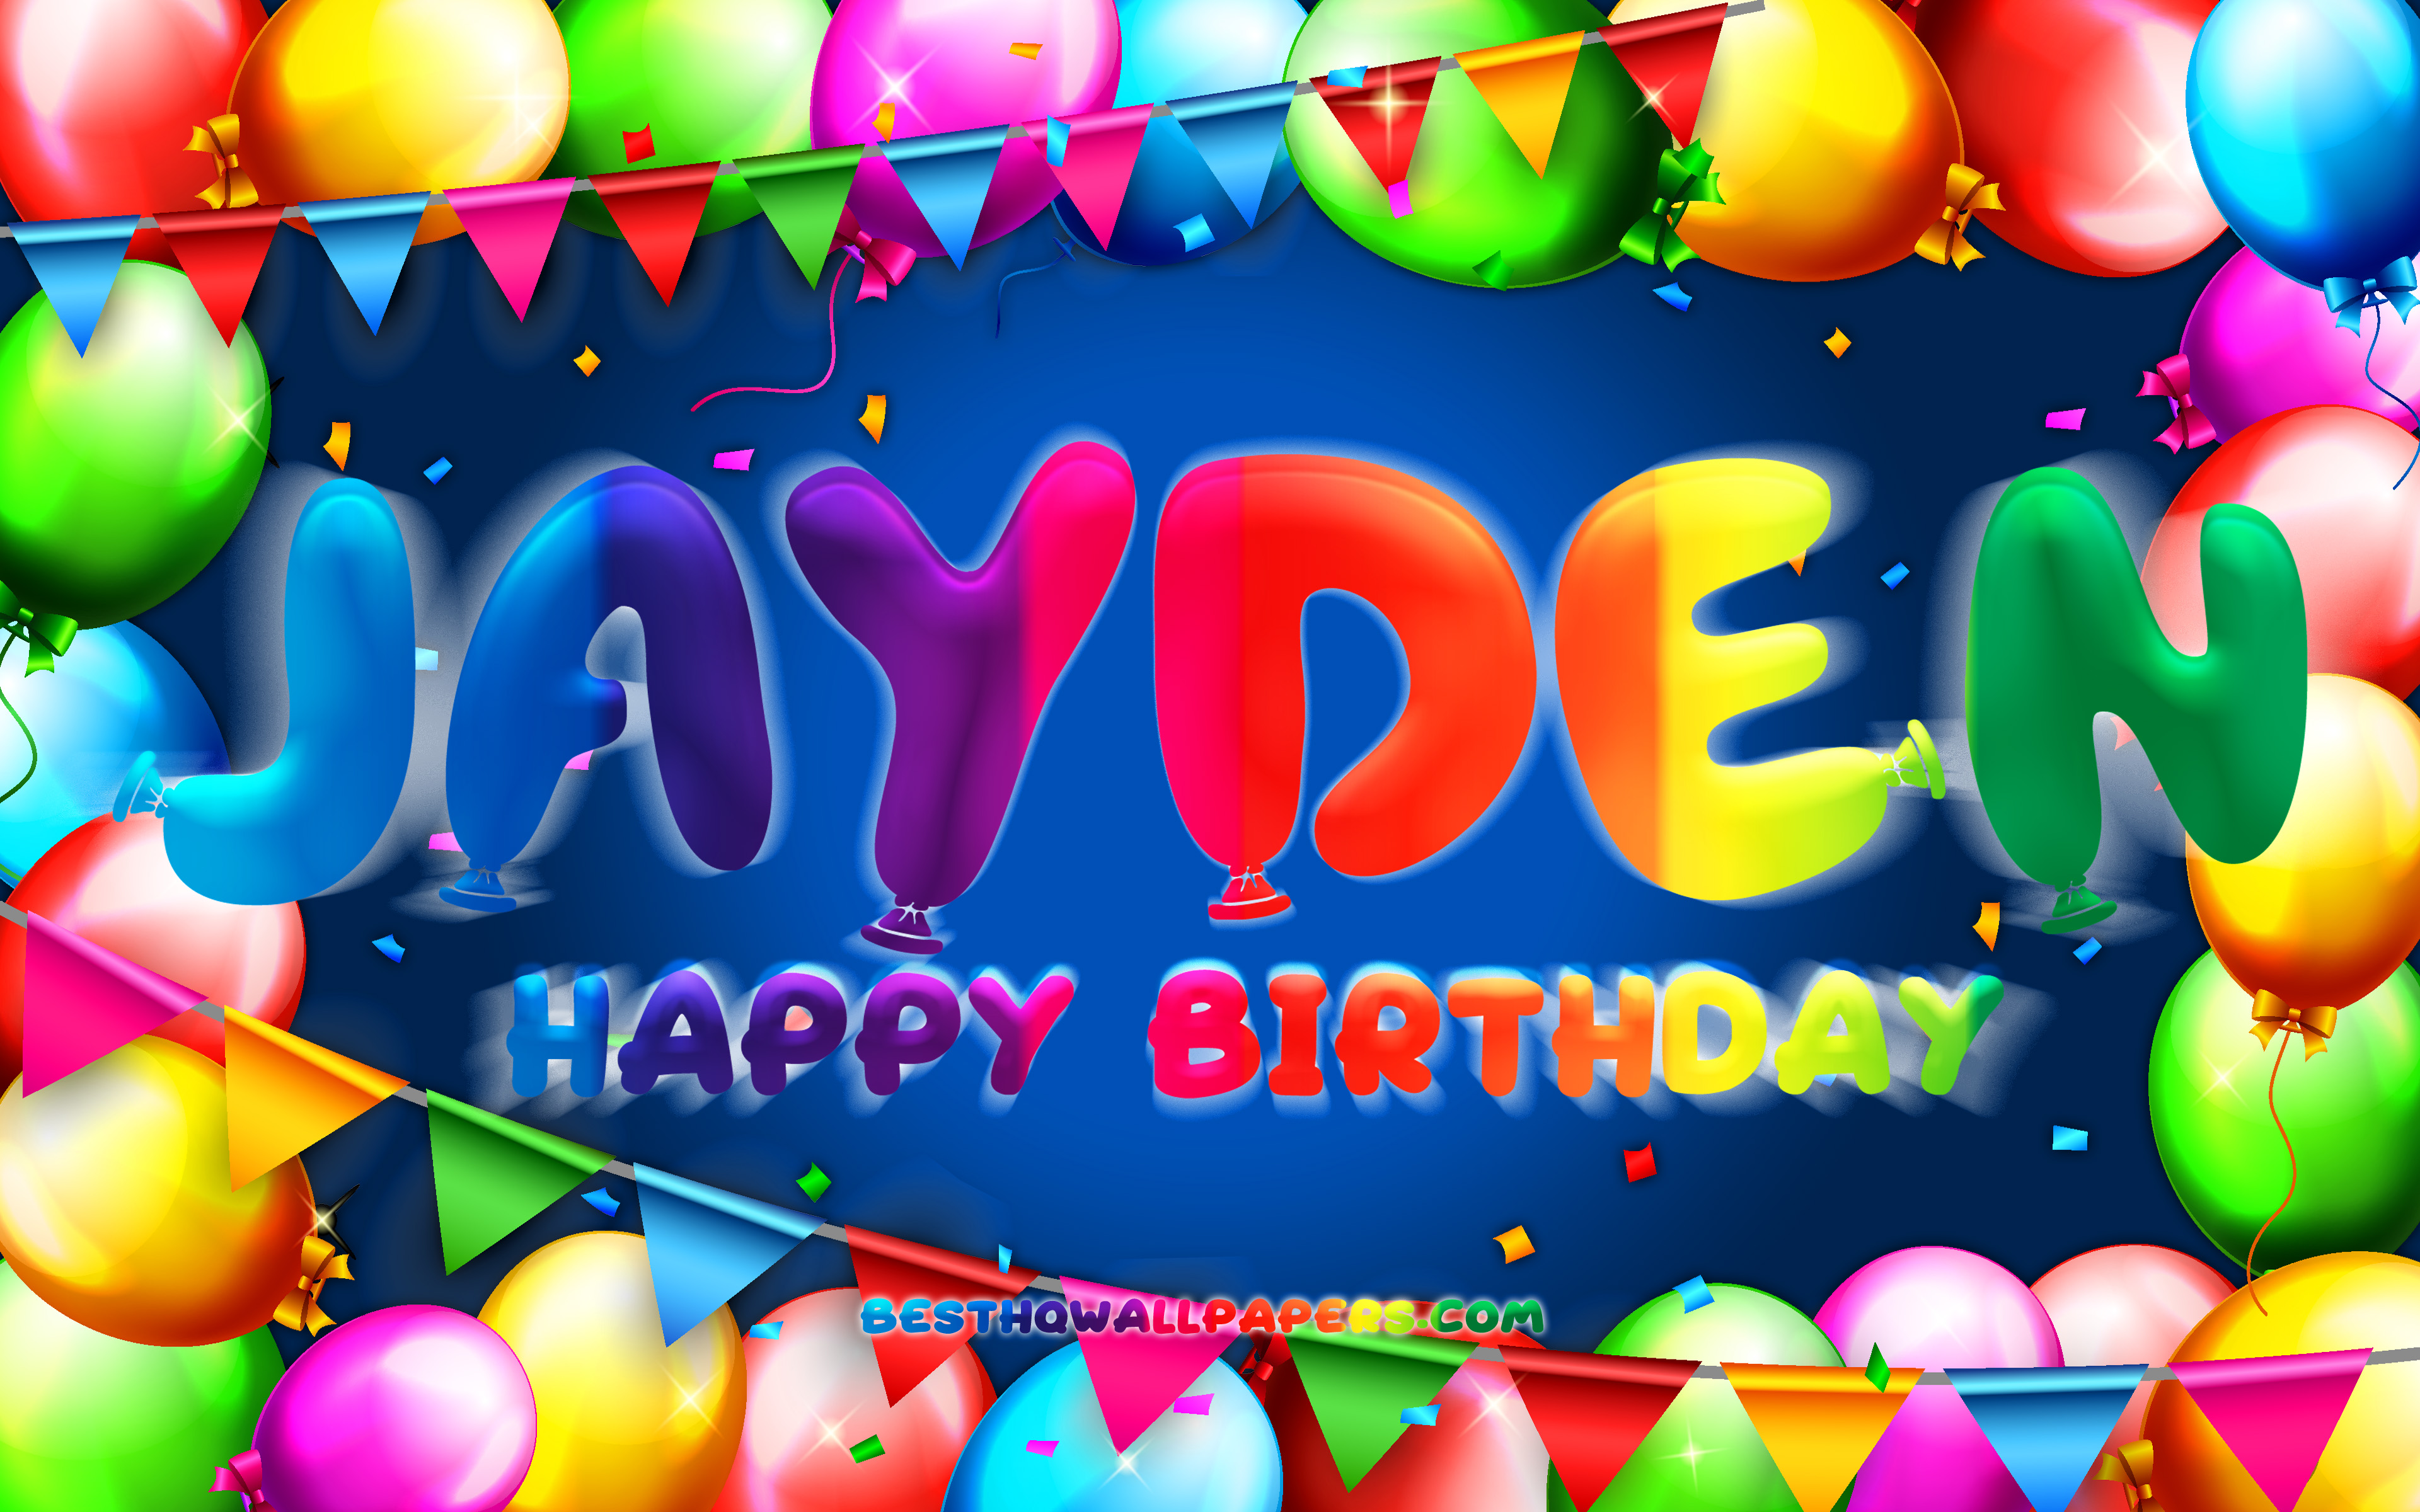 Happy Birthday Jayden, 4k, colorful balloon frame, Jayden name, blue backgr...